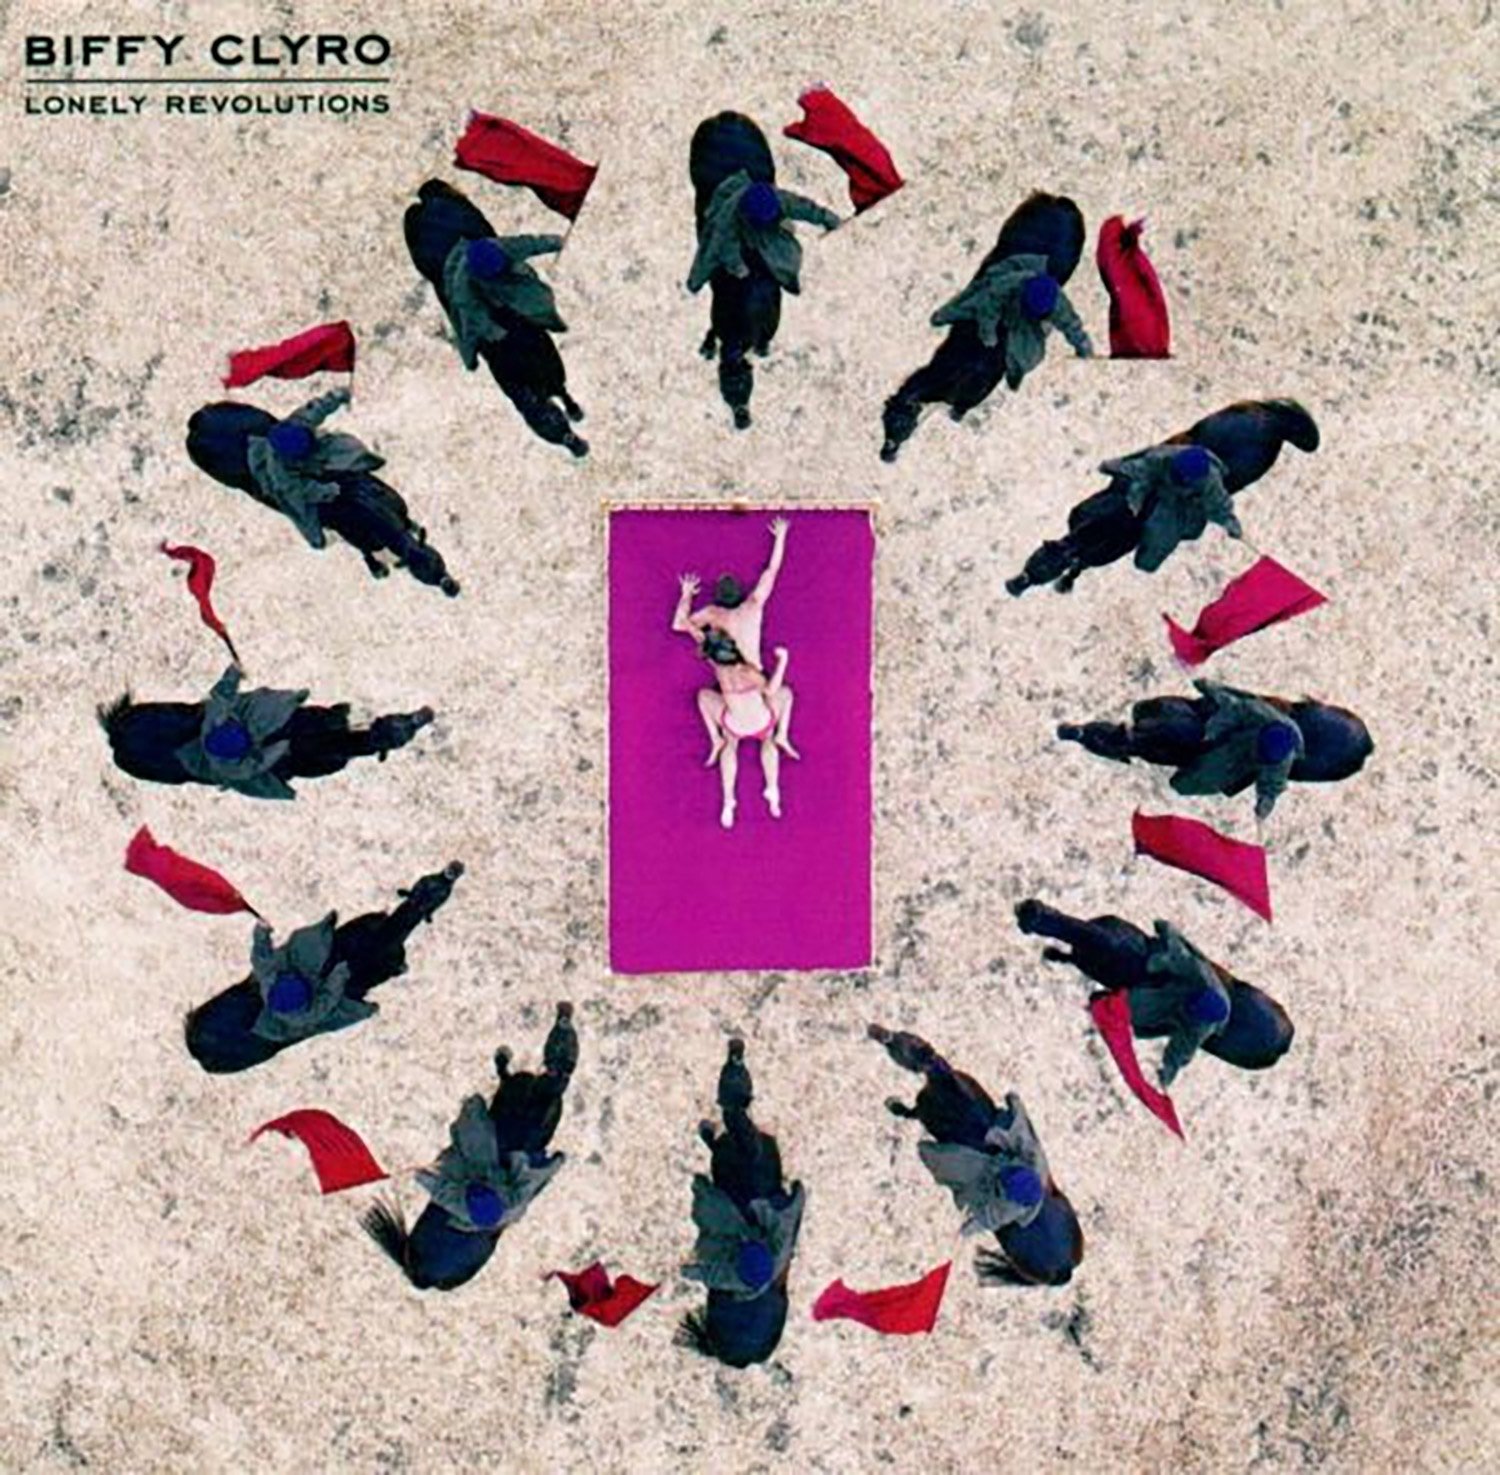 Biffy Clyro / Lonely Revolutions (Album Cover)